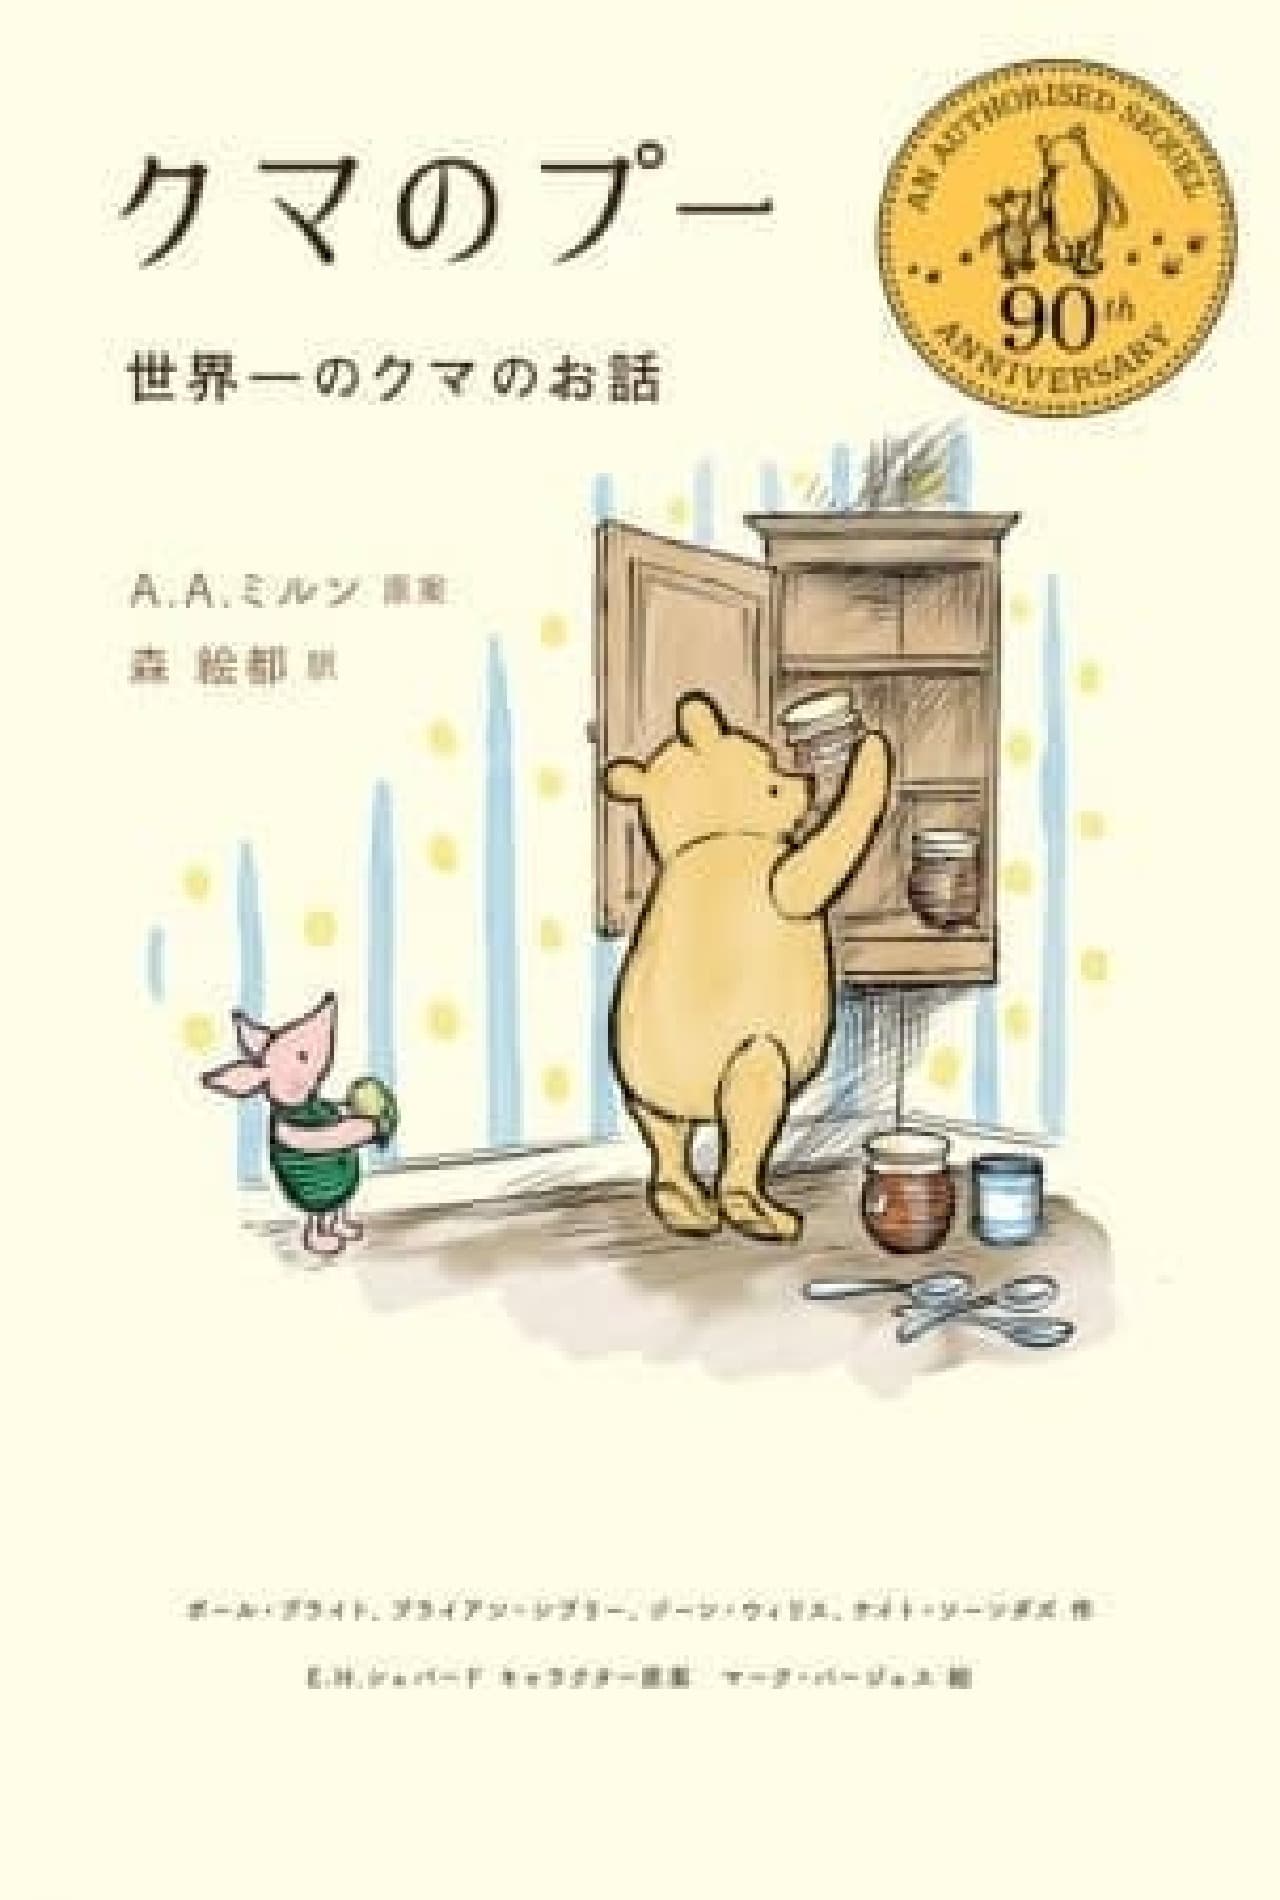 KADOKAWA "The story of the best bear in the world"